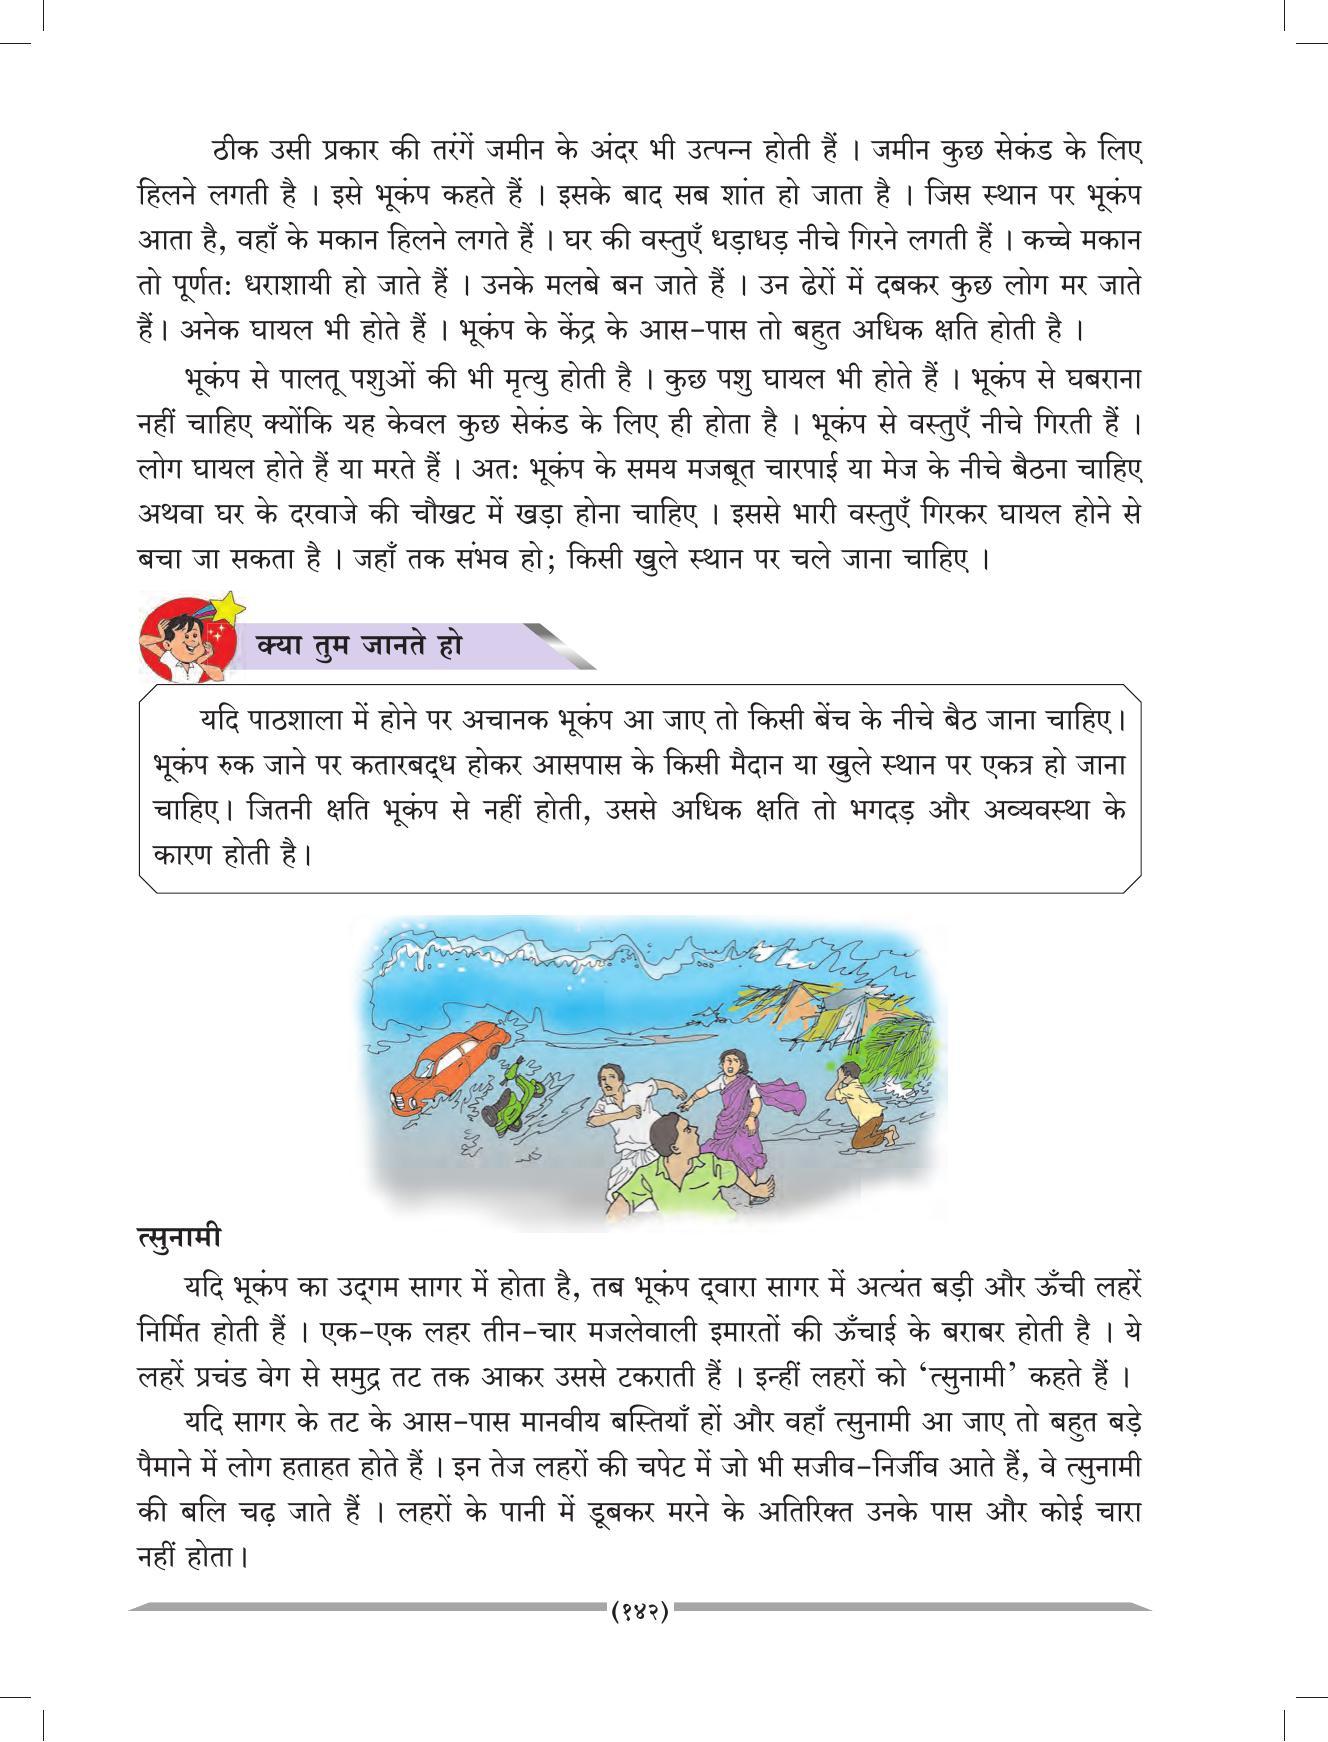 Maharashtra Board Class 4 EVS 1 (Hindi Medium) Textbook - Page 152